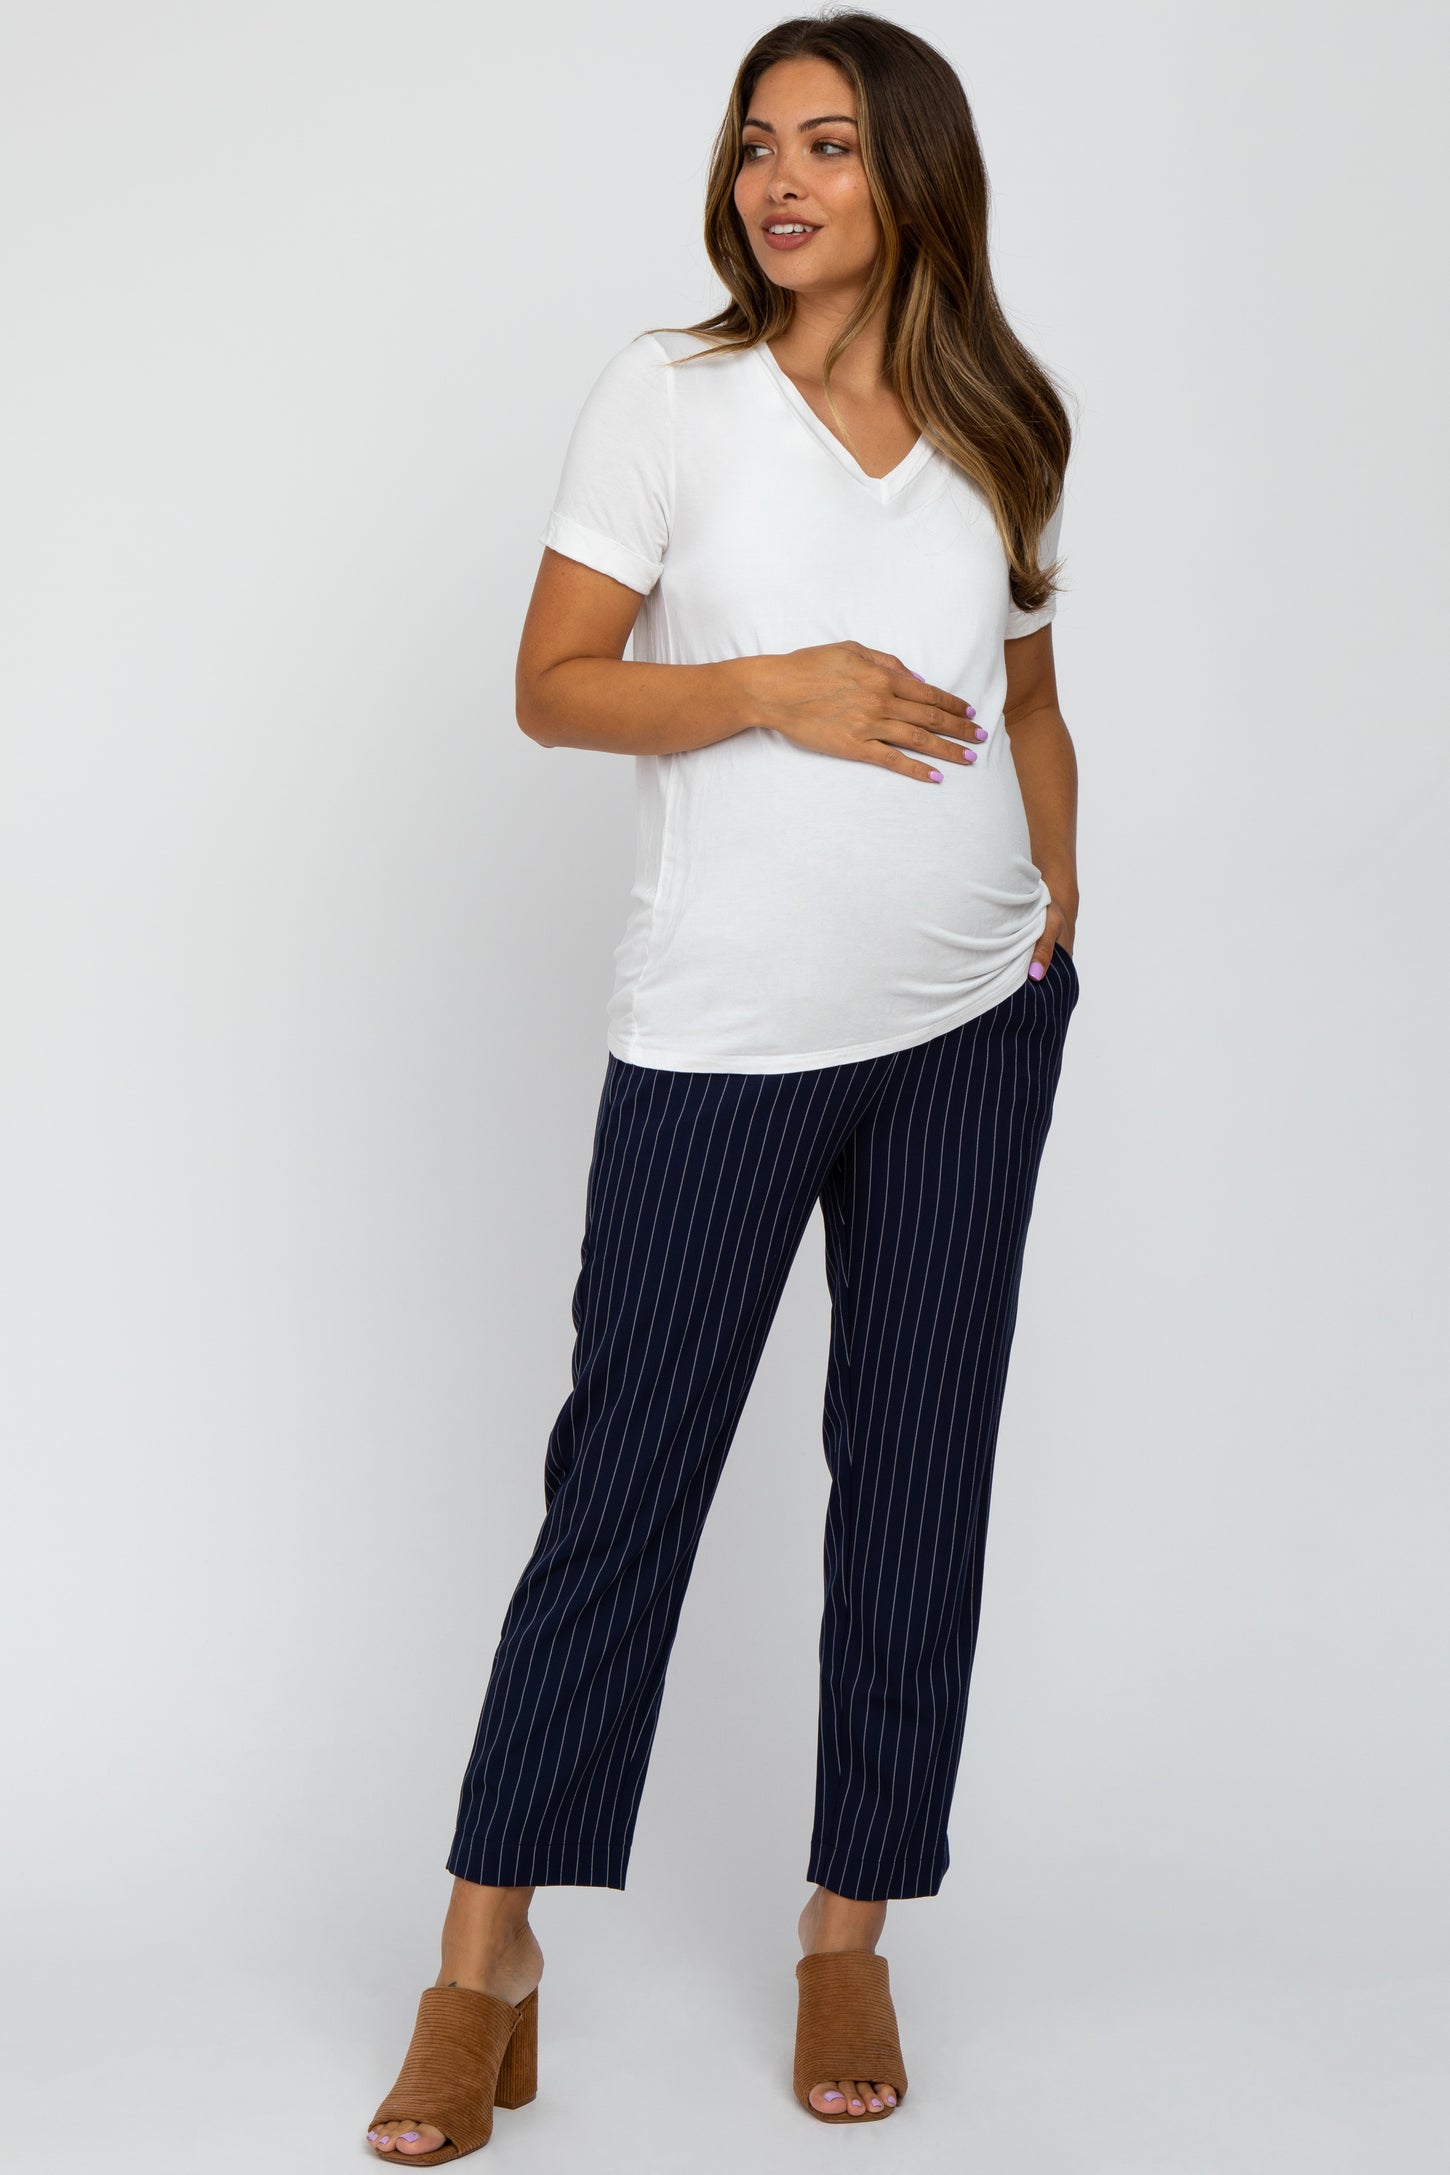 Navy Blue Pinstripe Maternity Pants